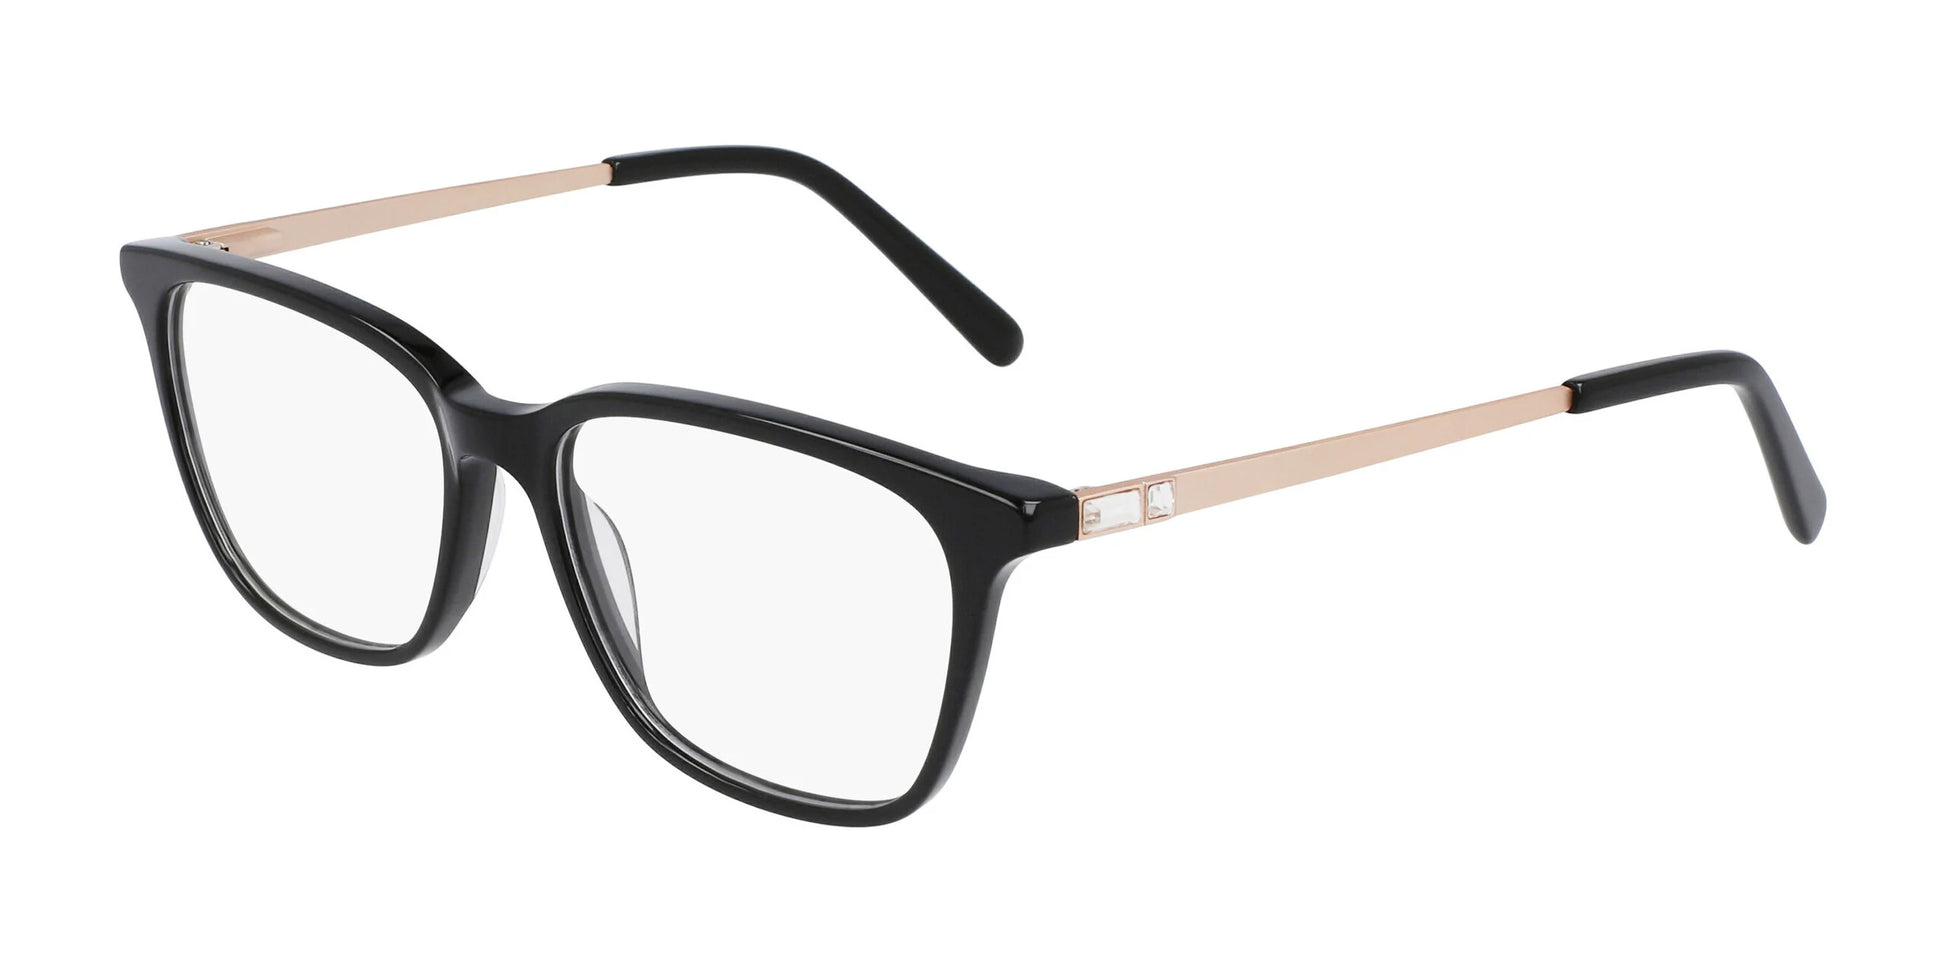 Marchon NYC 5021 Eyeglasses Black